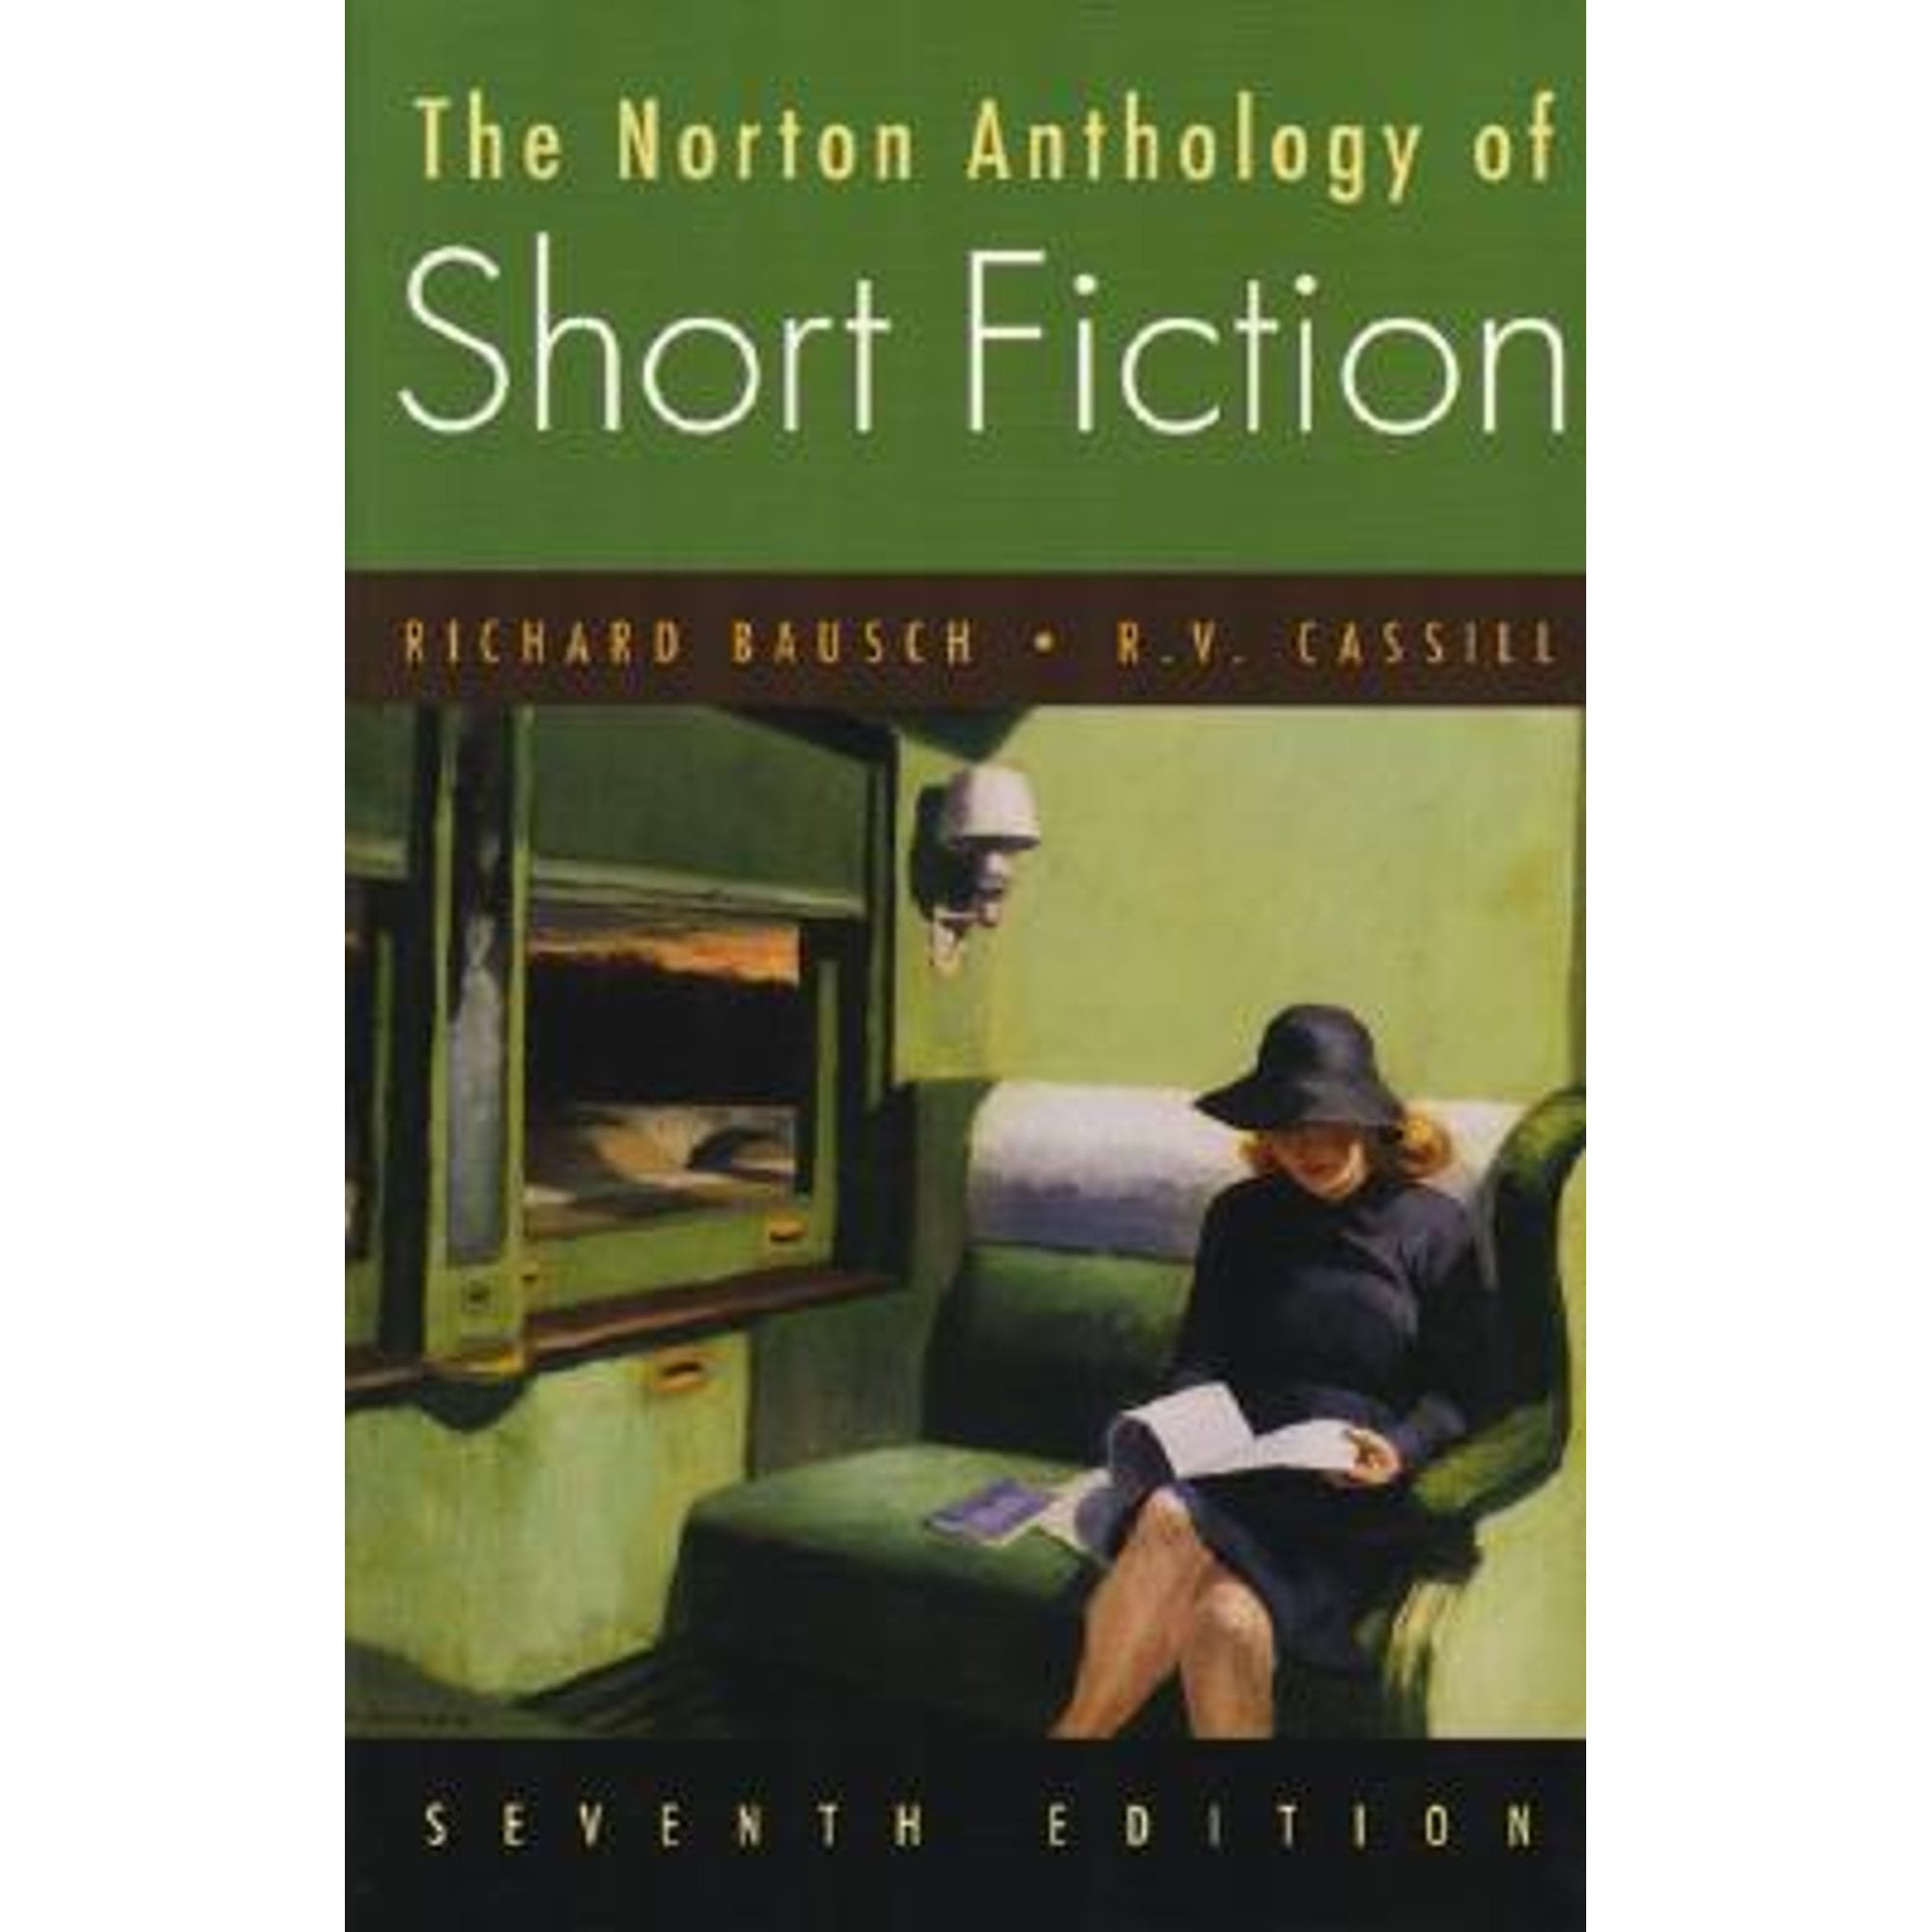 Short fiction. Richard КЕRN асtiоn. Selected short Fiction. The Norton Anthology of American Literature, “Ralph Ellison 1914- 1994.